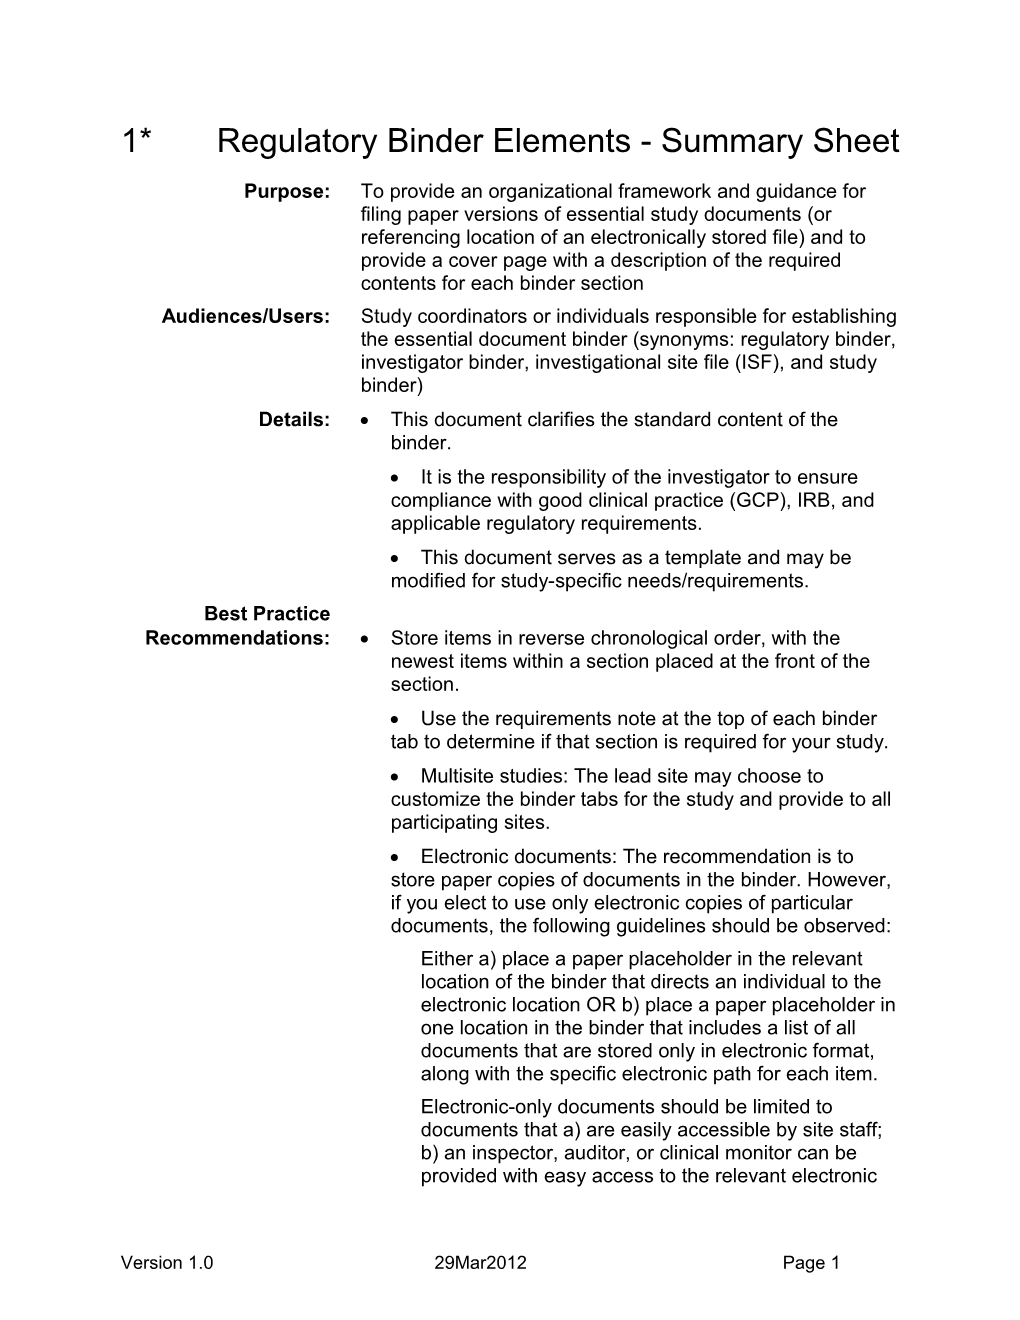 Regulatory Binder Elements - Summary Sheet